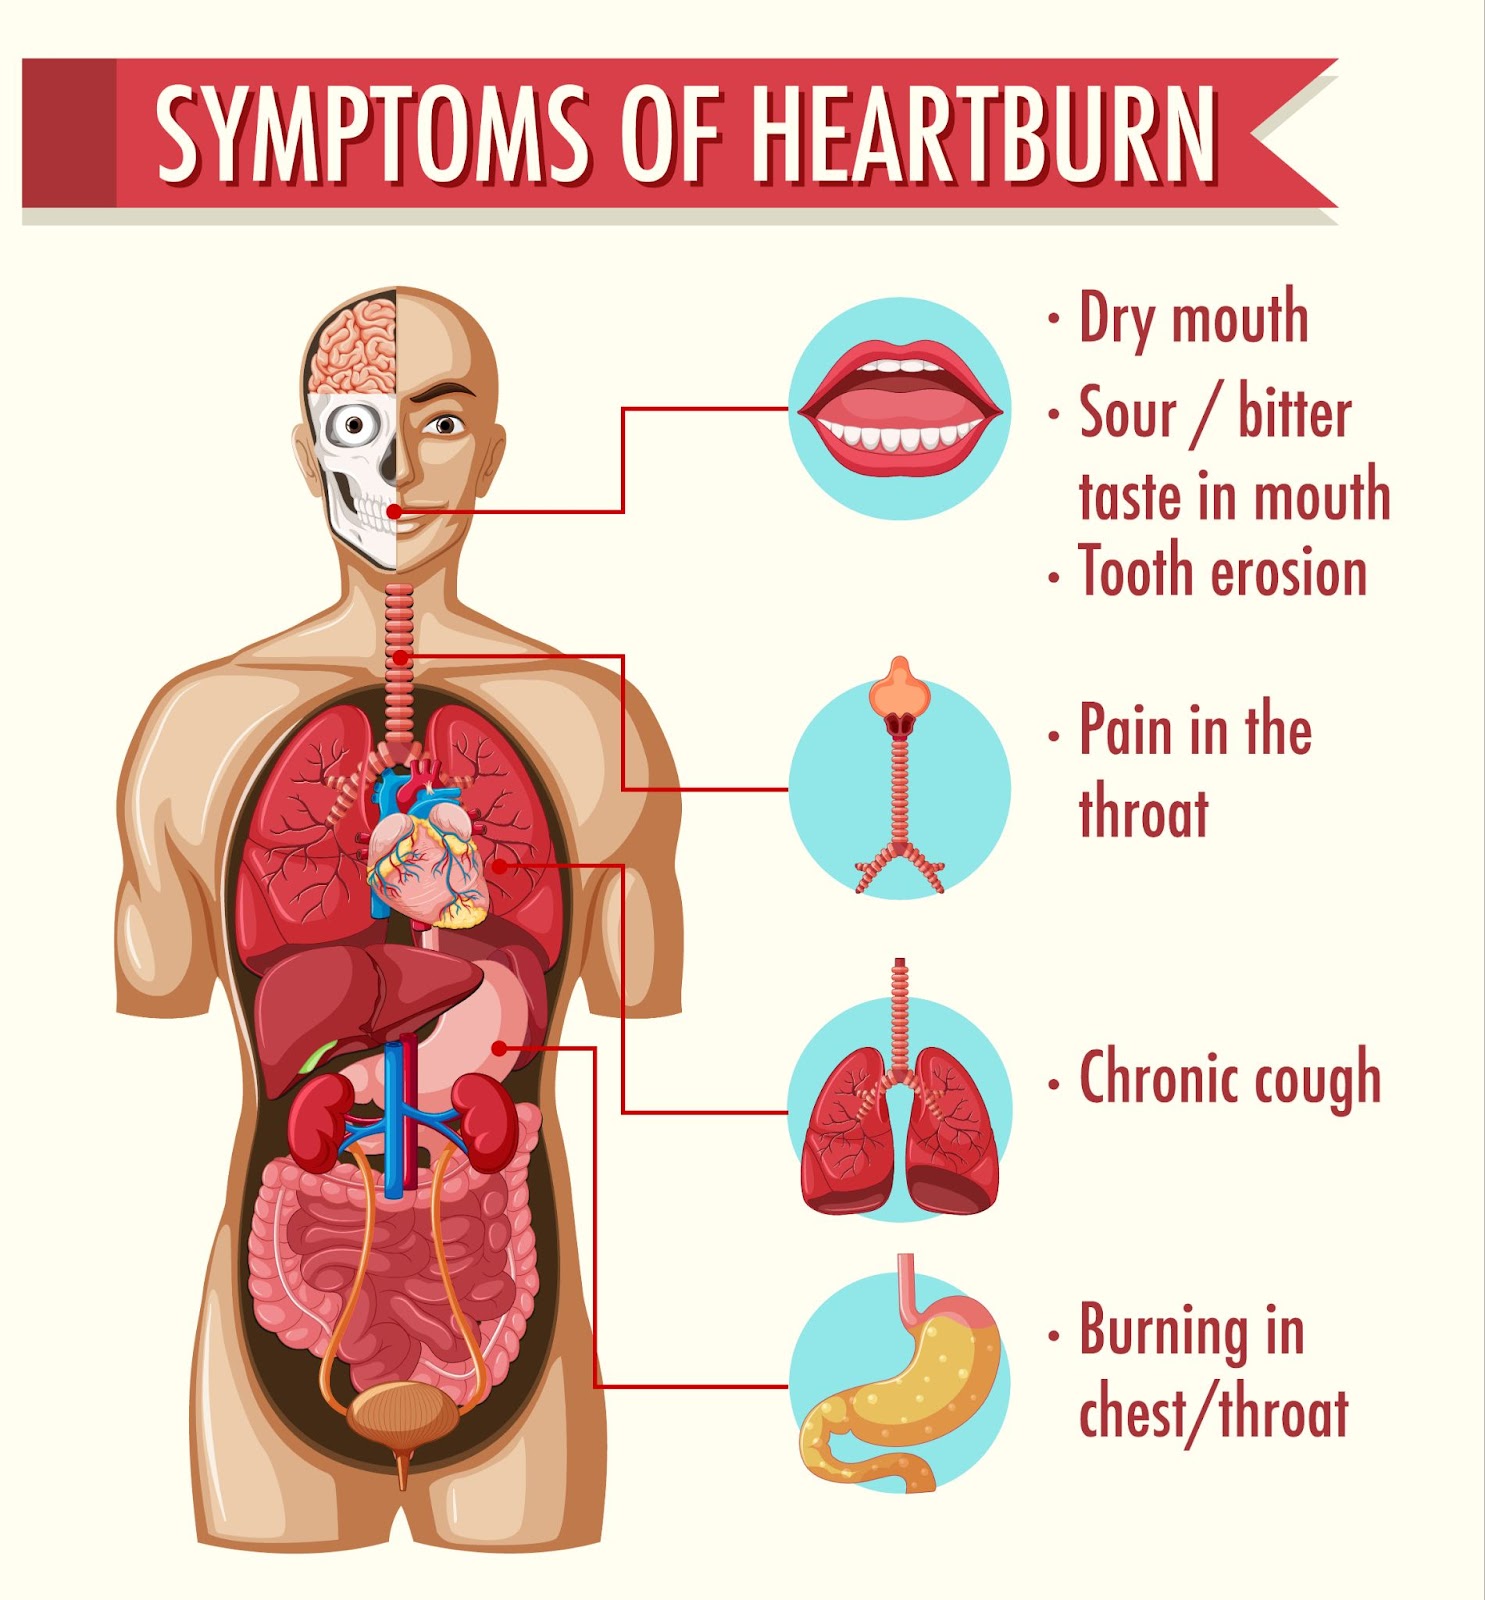 Symptoms of heartburn information infographic